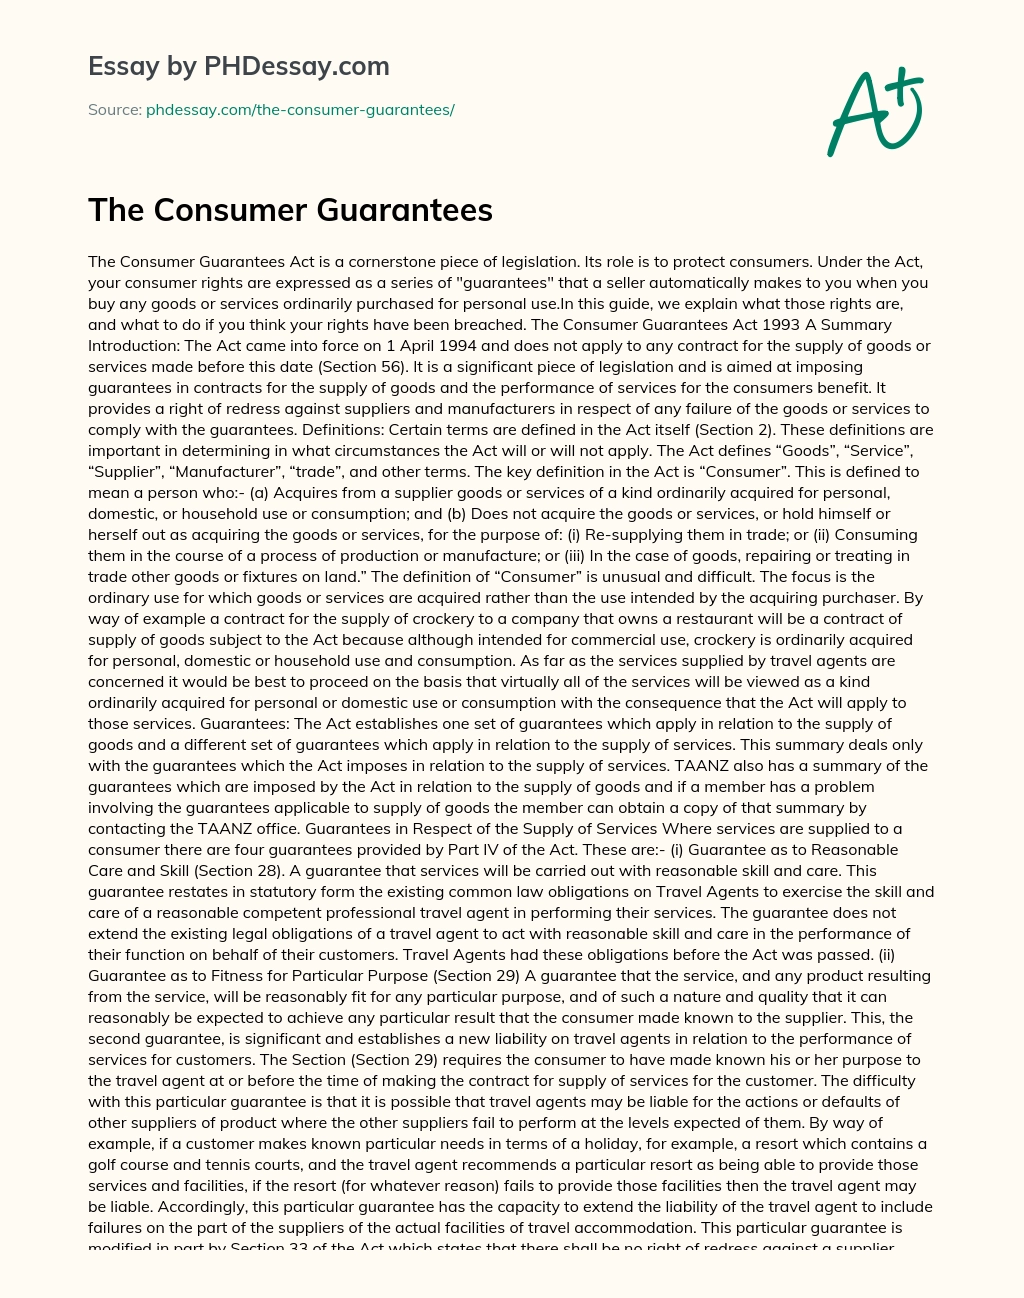 The Consumer Guarantees essay